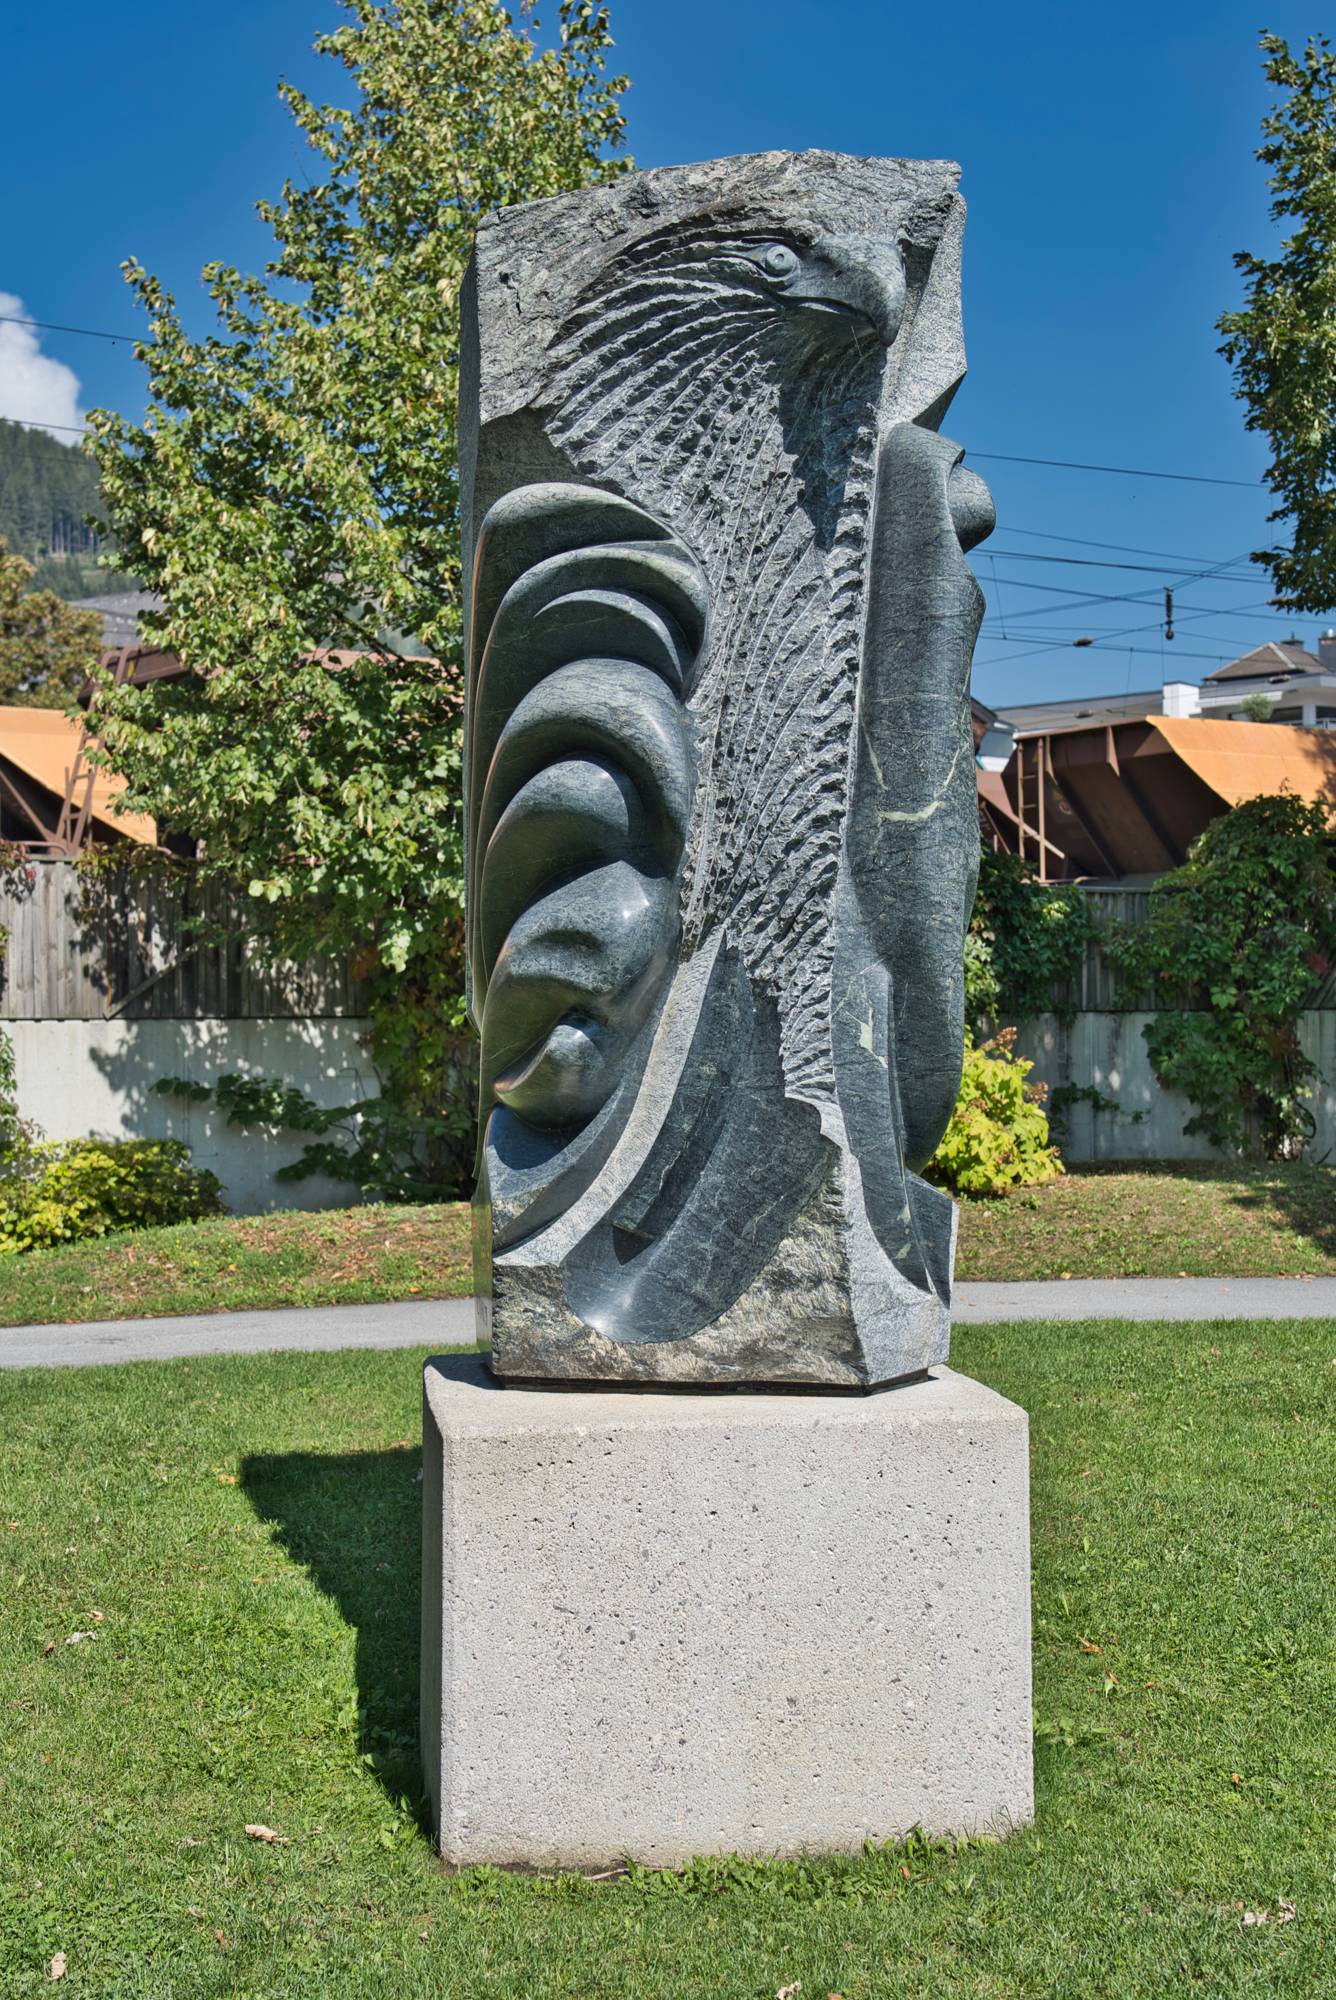 Weyringer's sculptures: the Eagle